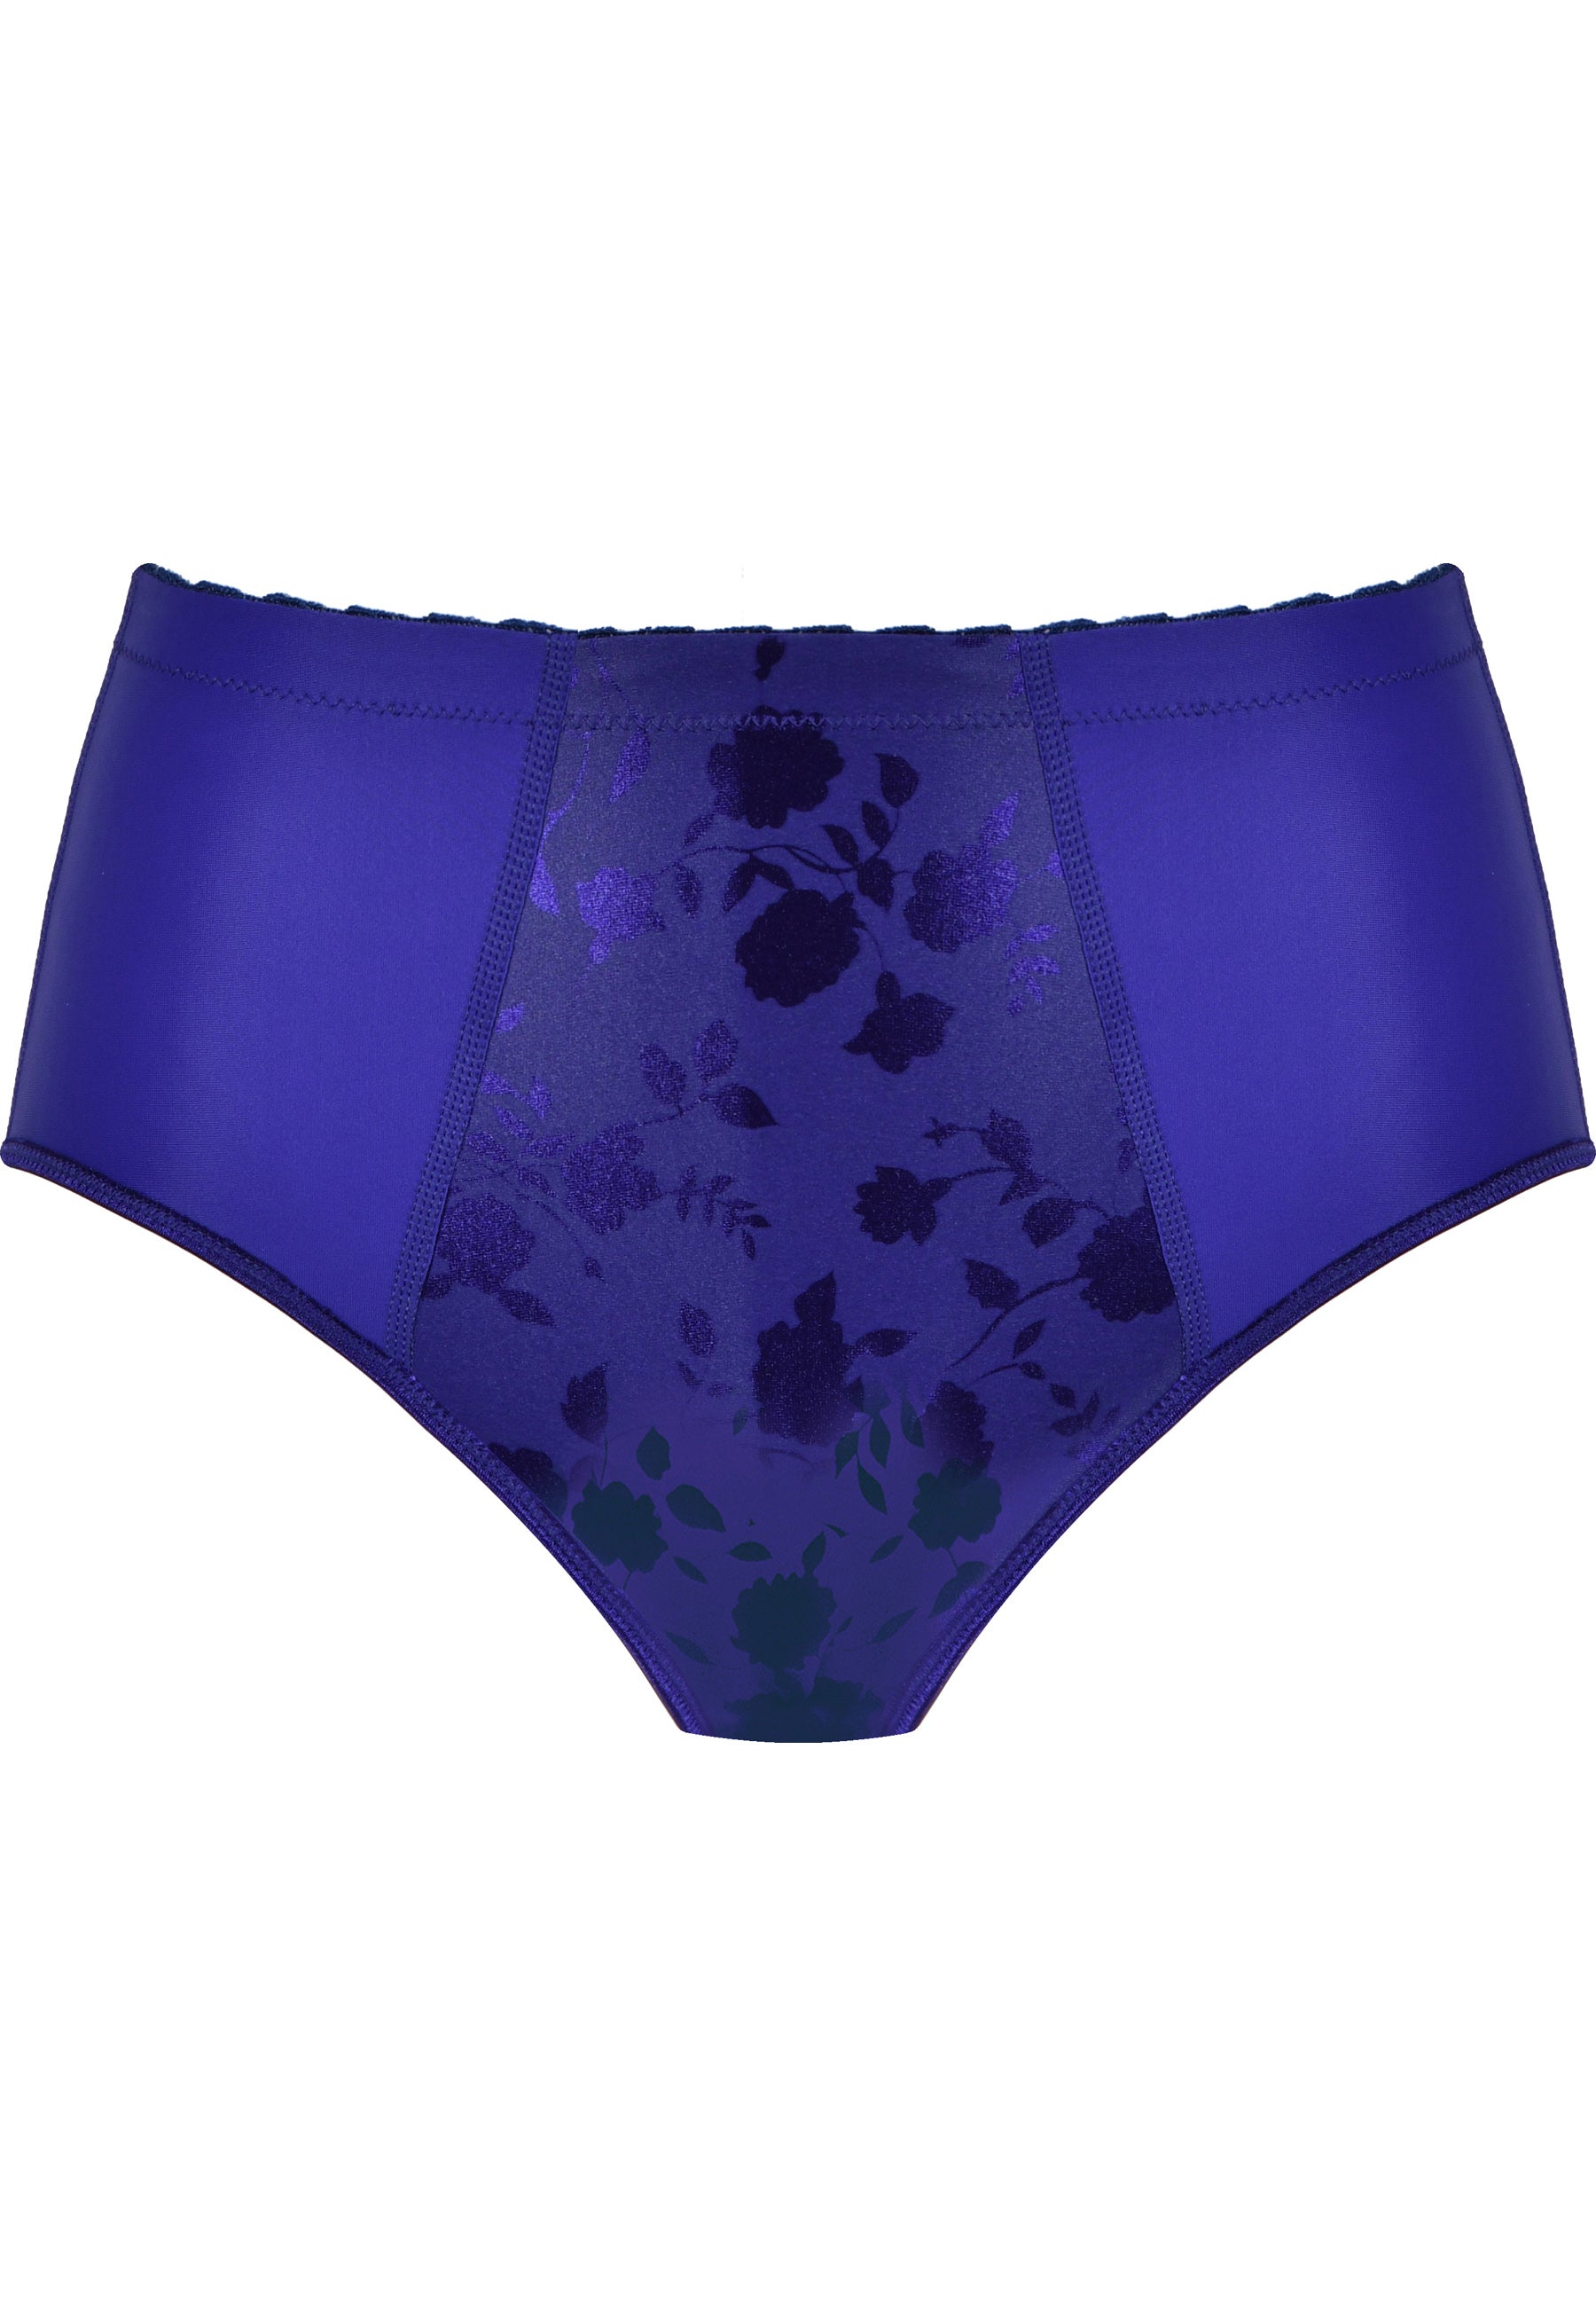 Minimizer briefs in floral pattern - Galaxy Violet